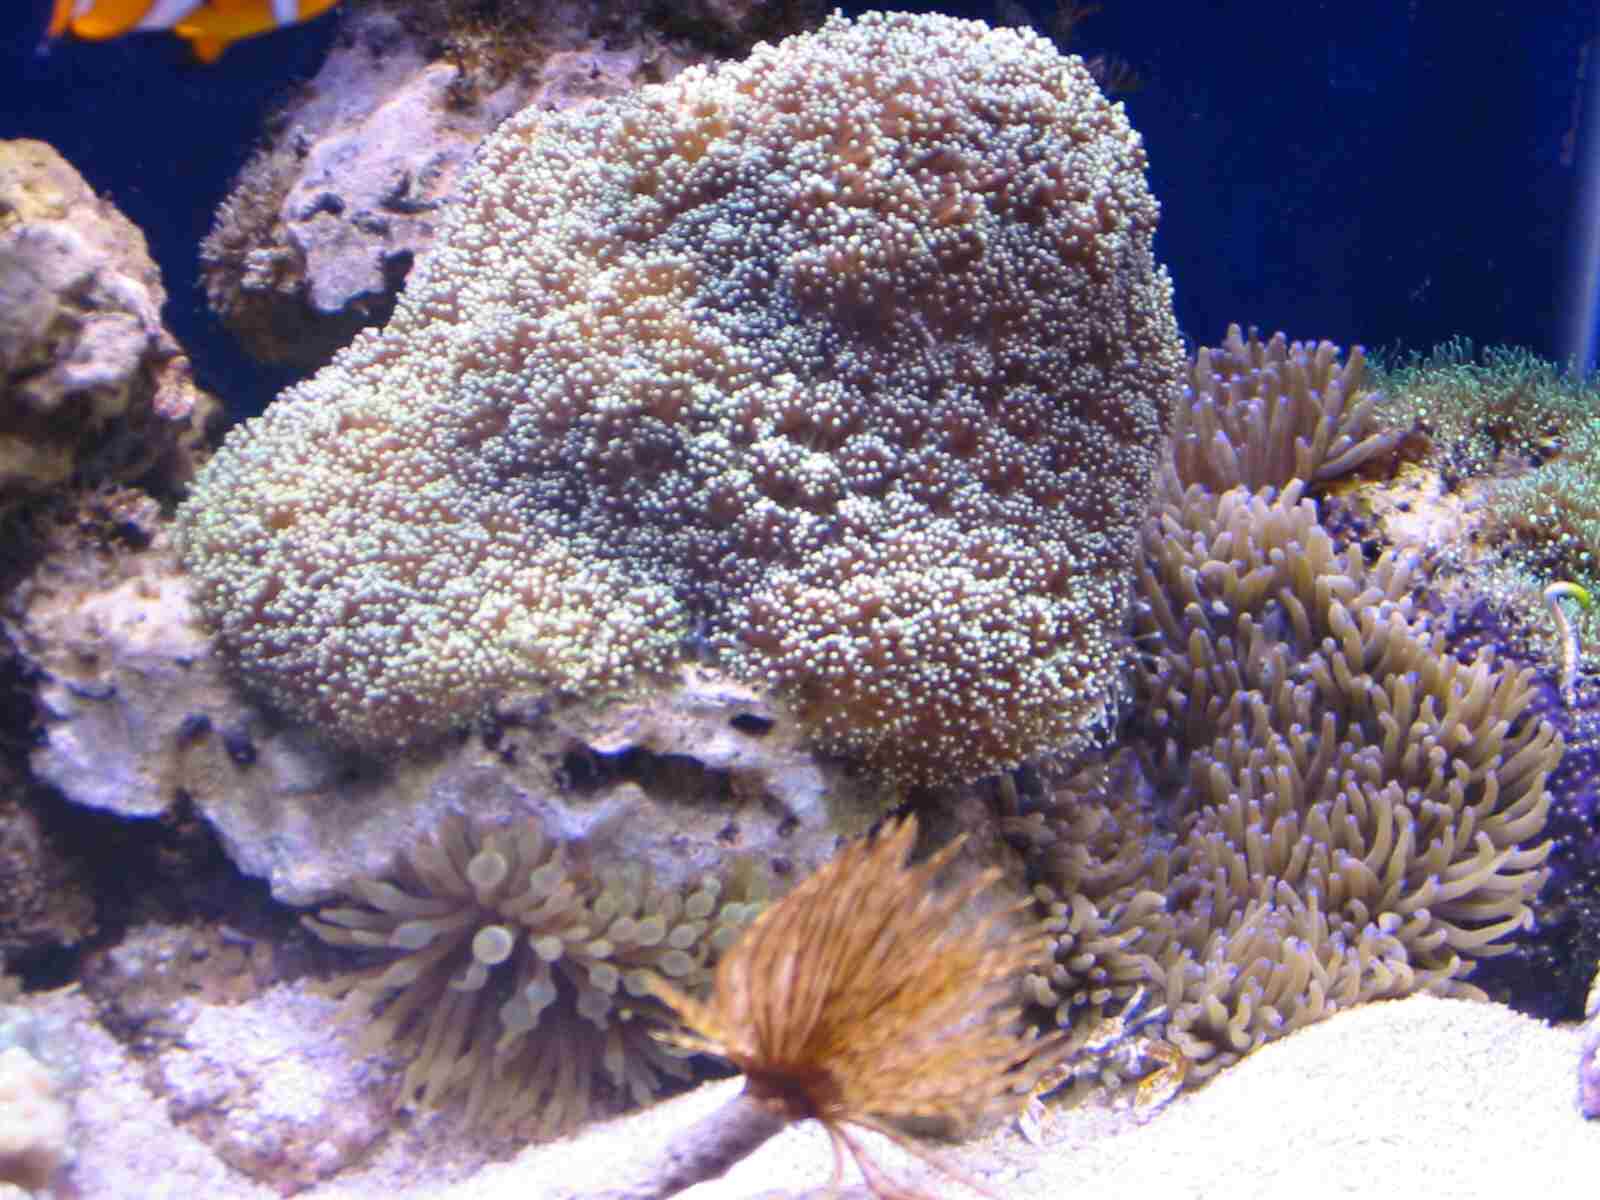 Galxea coral, Sebae anemone, feather duster